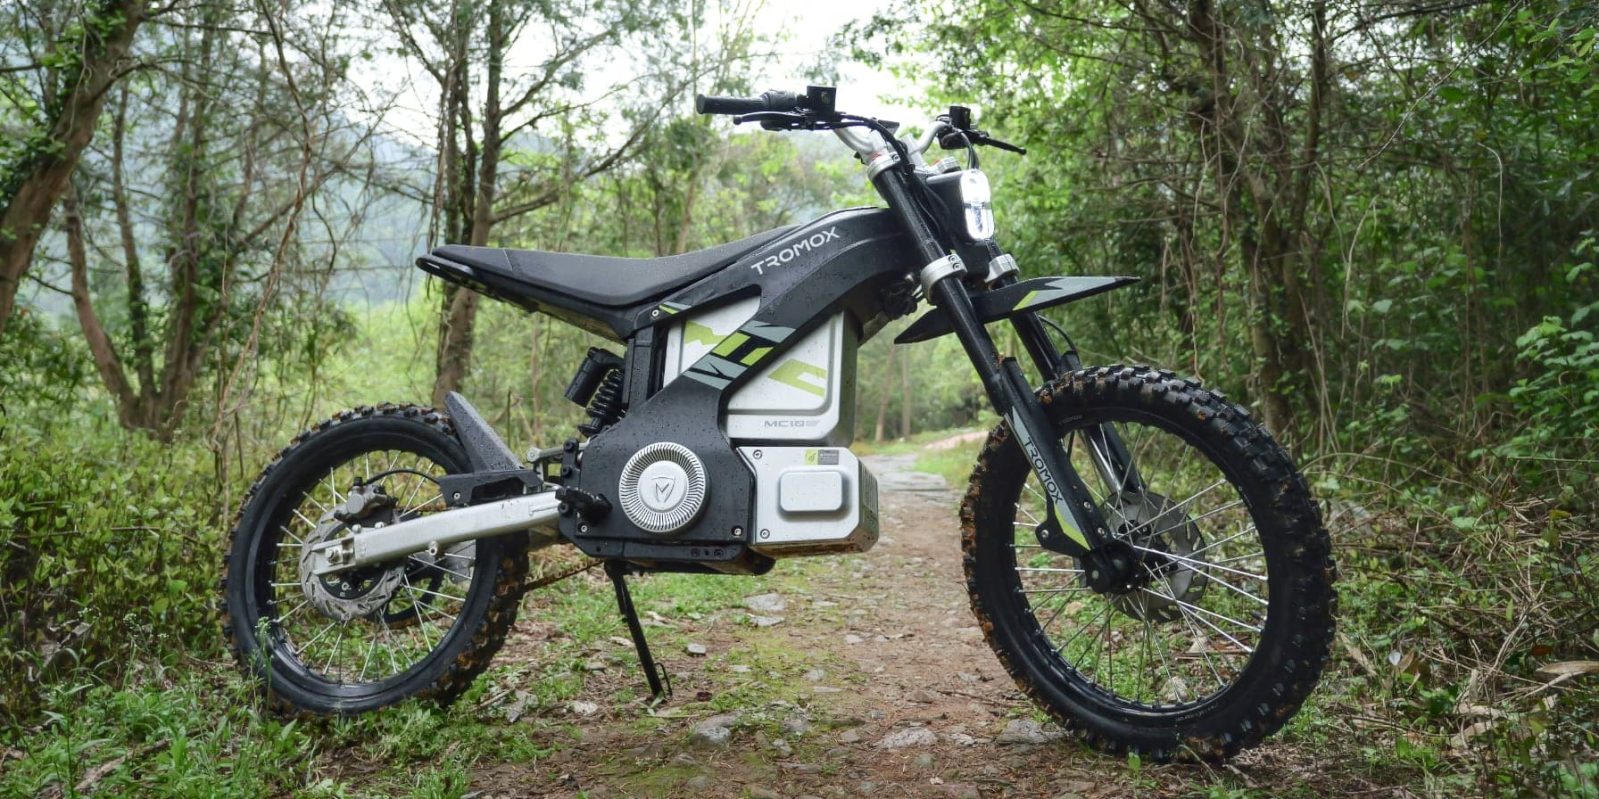 tromox mc10 trailx electric motorcycle